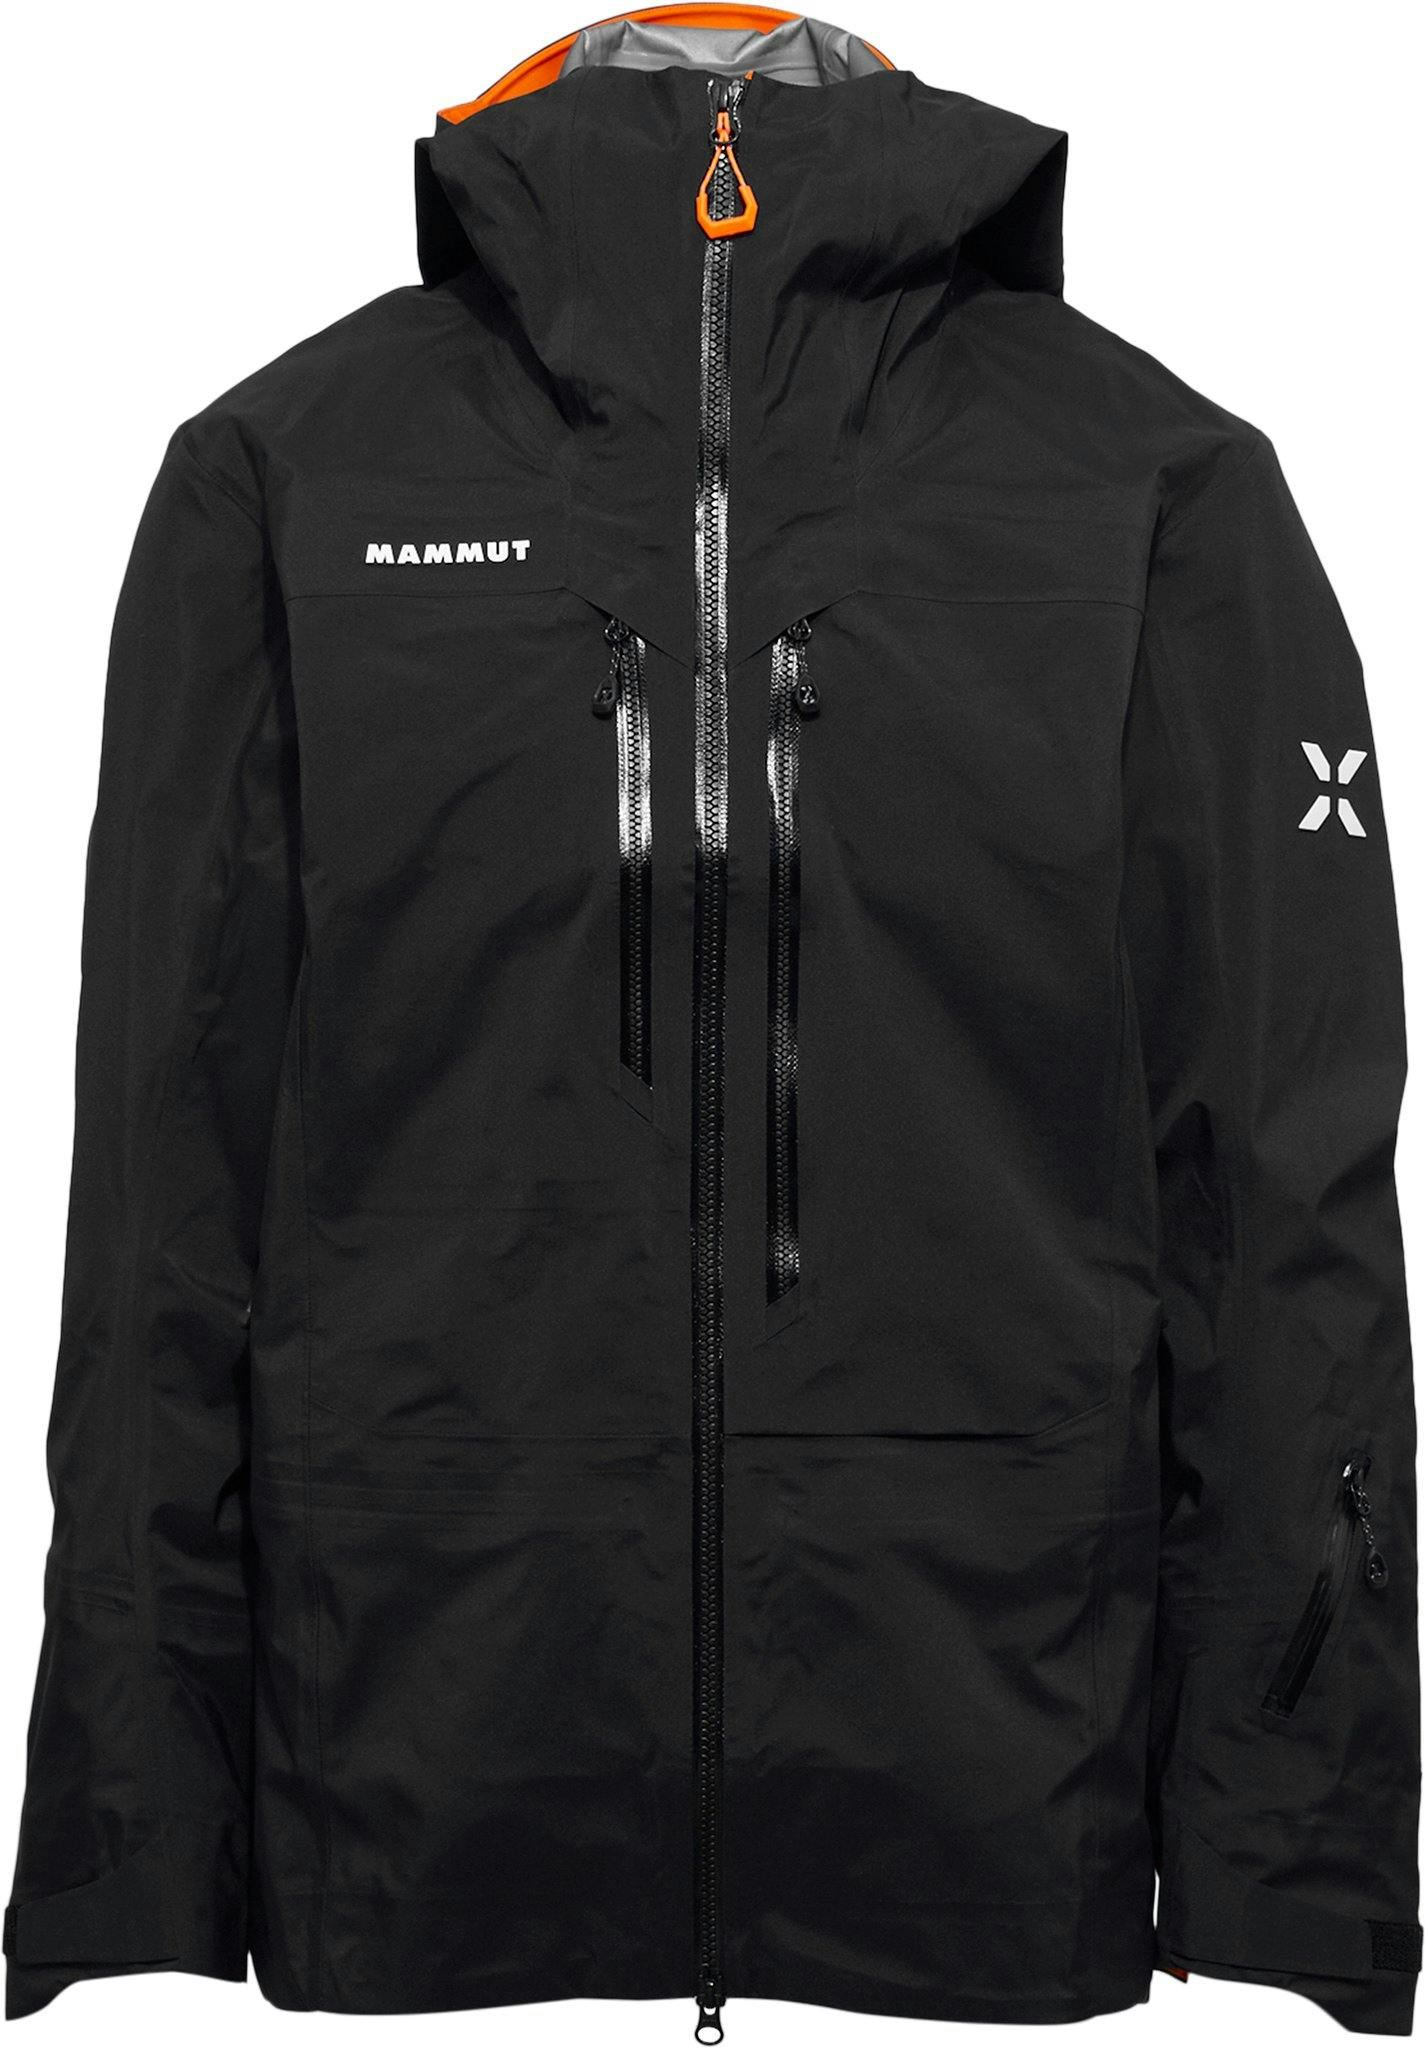 Product image for Eiger Free Advanced Hardshell Hooded Jacket - Men's